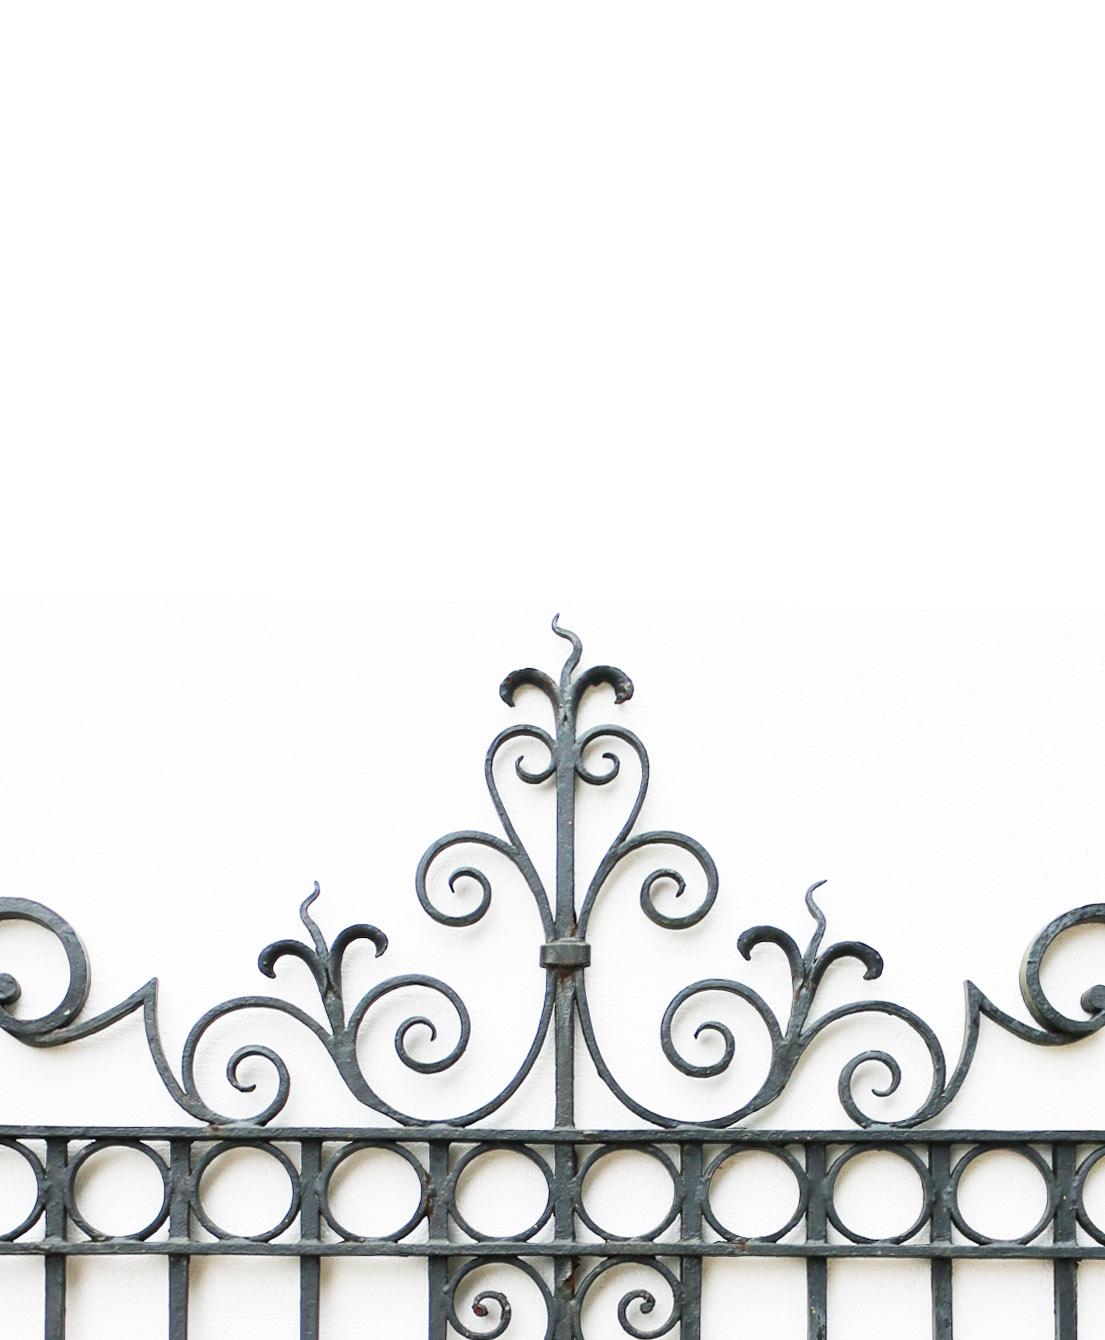 Hand-Crafted Wrought Iron Pedestrian / Garden Gate, circa 1900